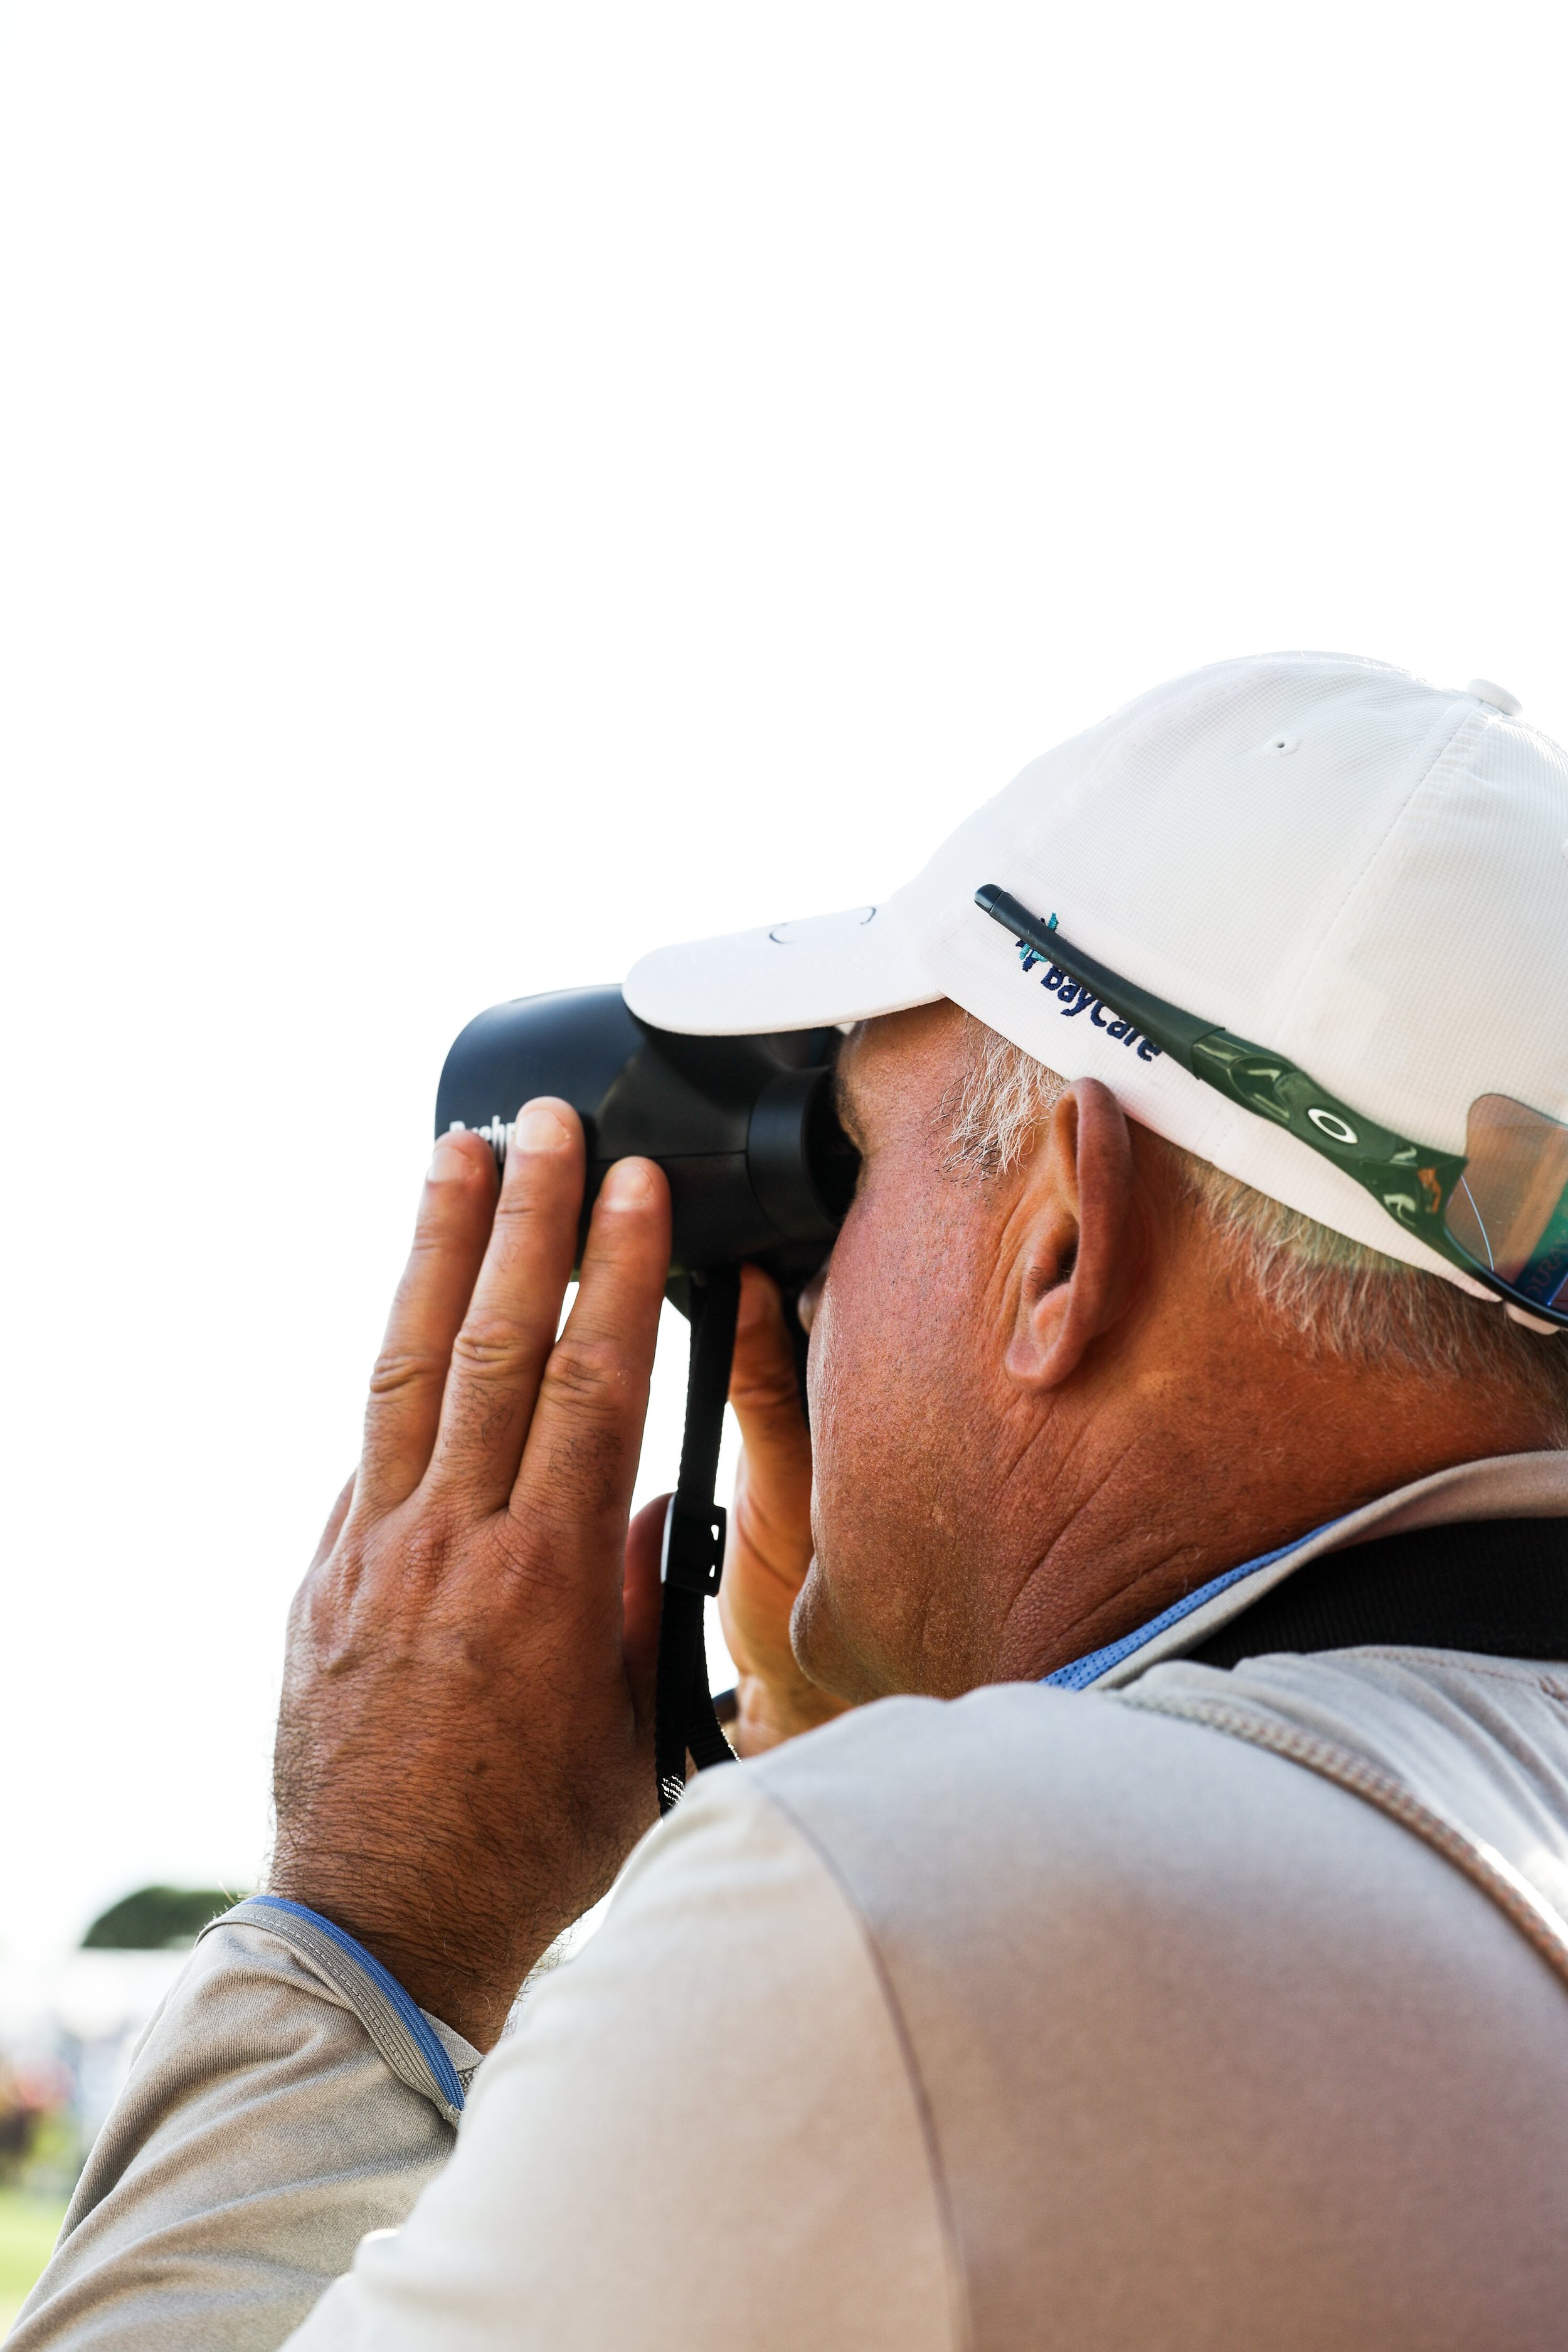  Spectator watching golf tournament through binoculars. 